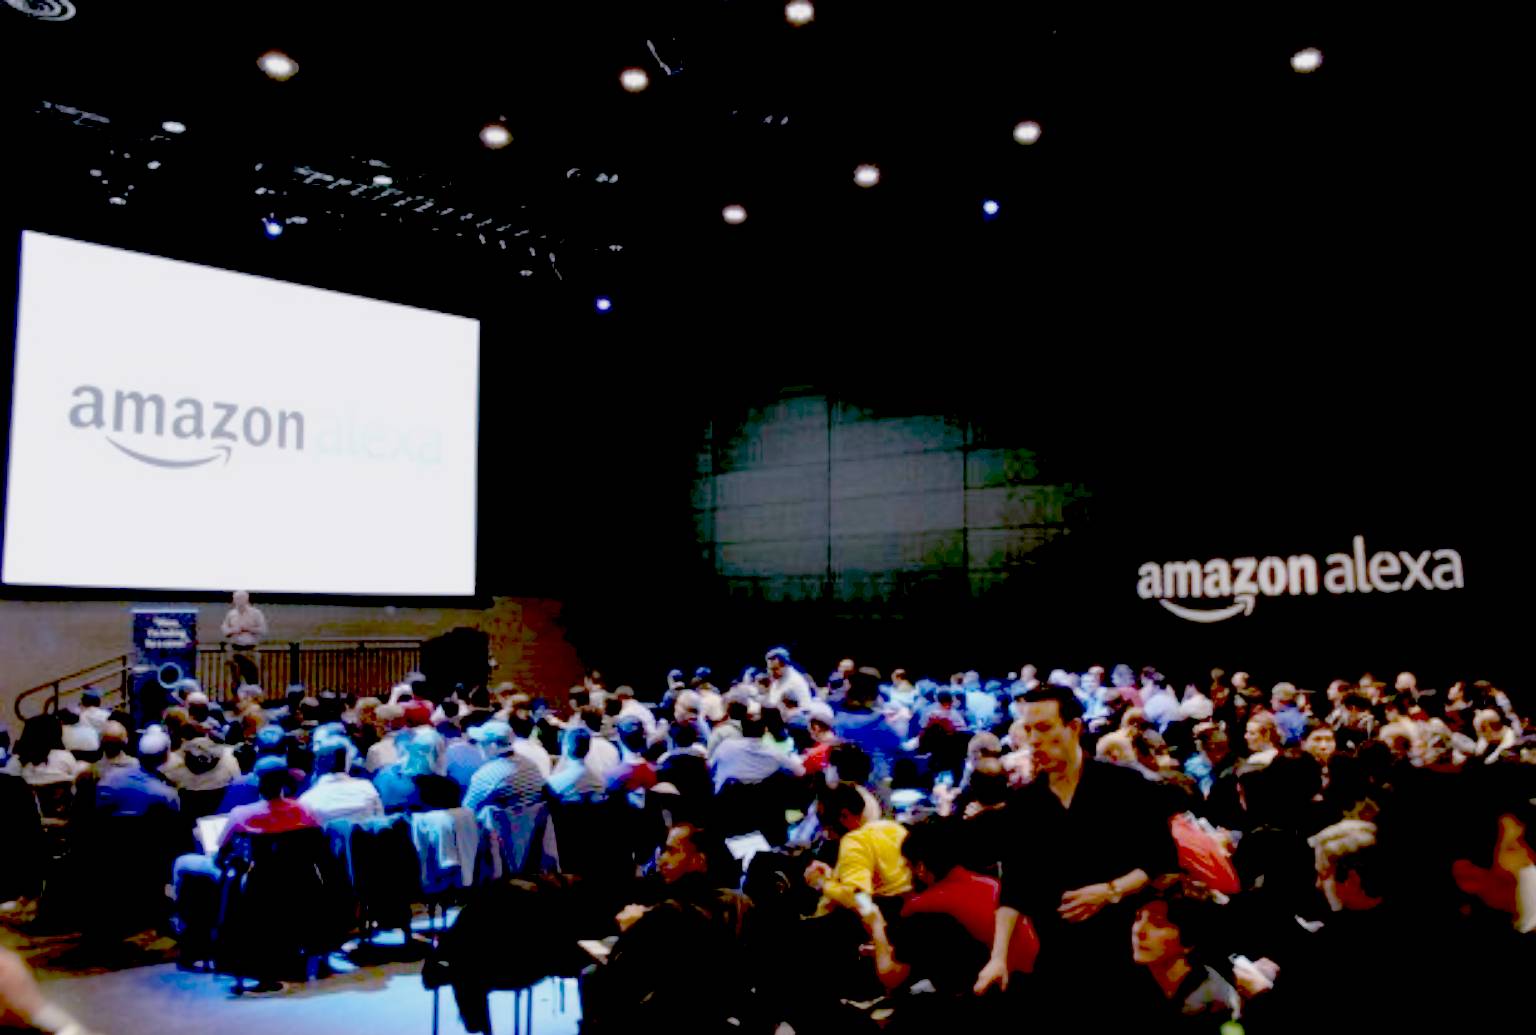 Big hardware event on Amazon